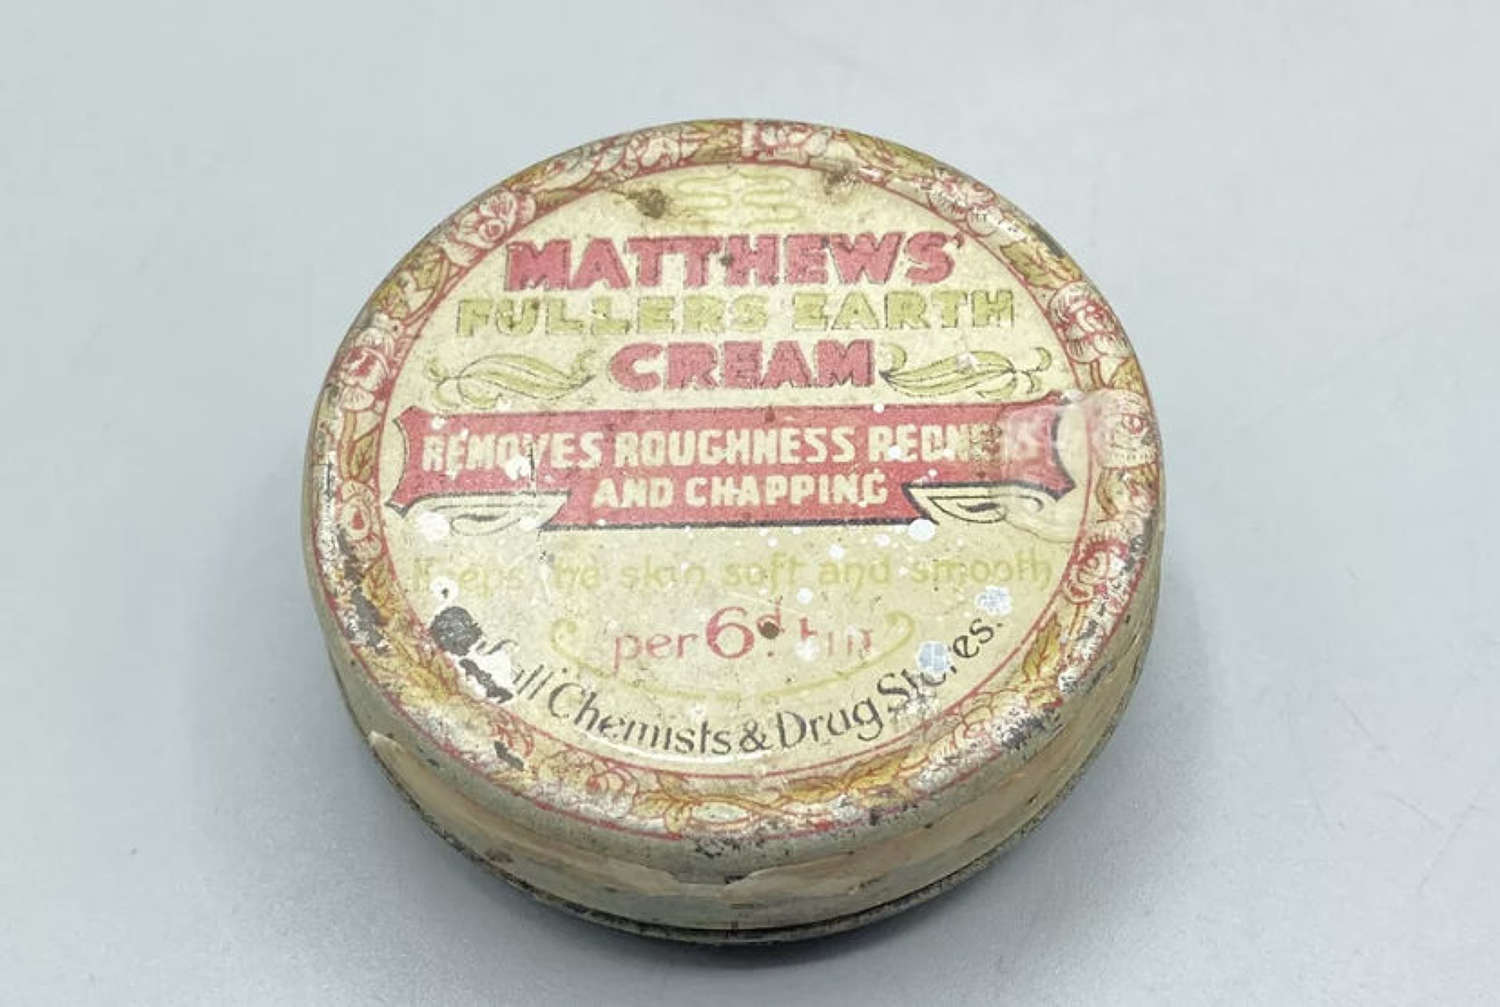 WW2 1930s British Home Front Matthews Fullers Earth Cream Tin